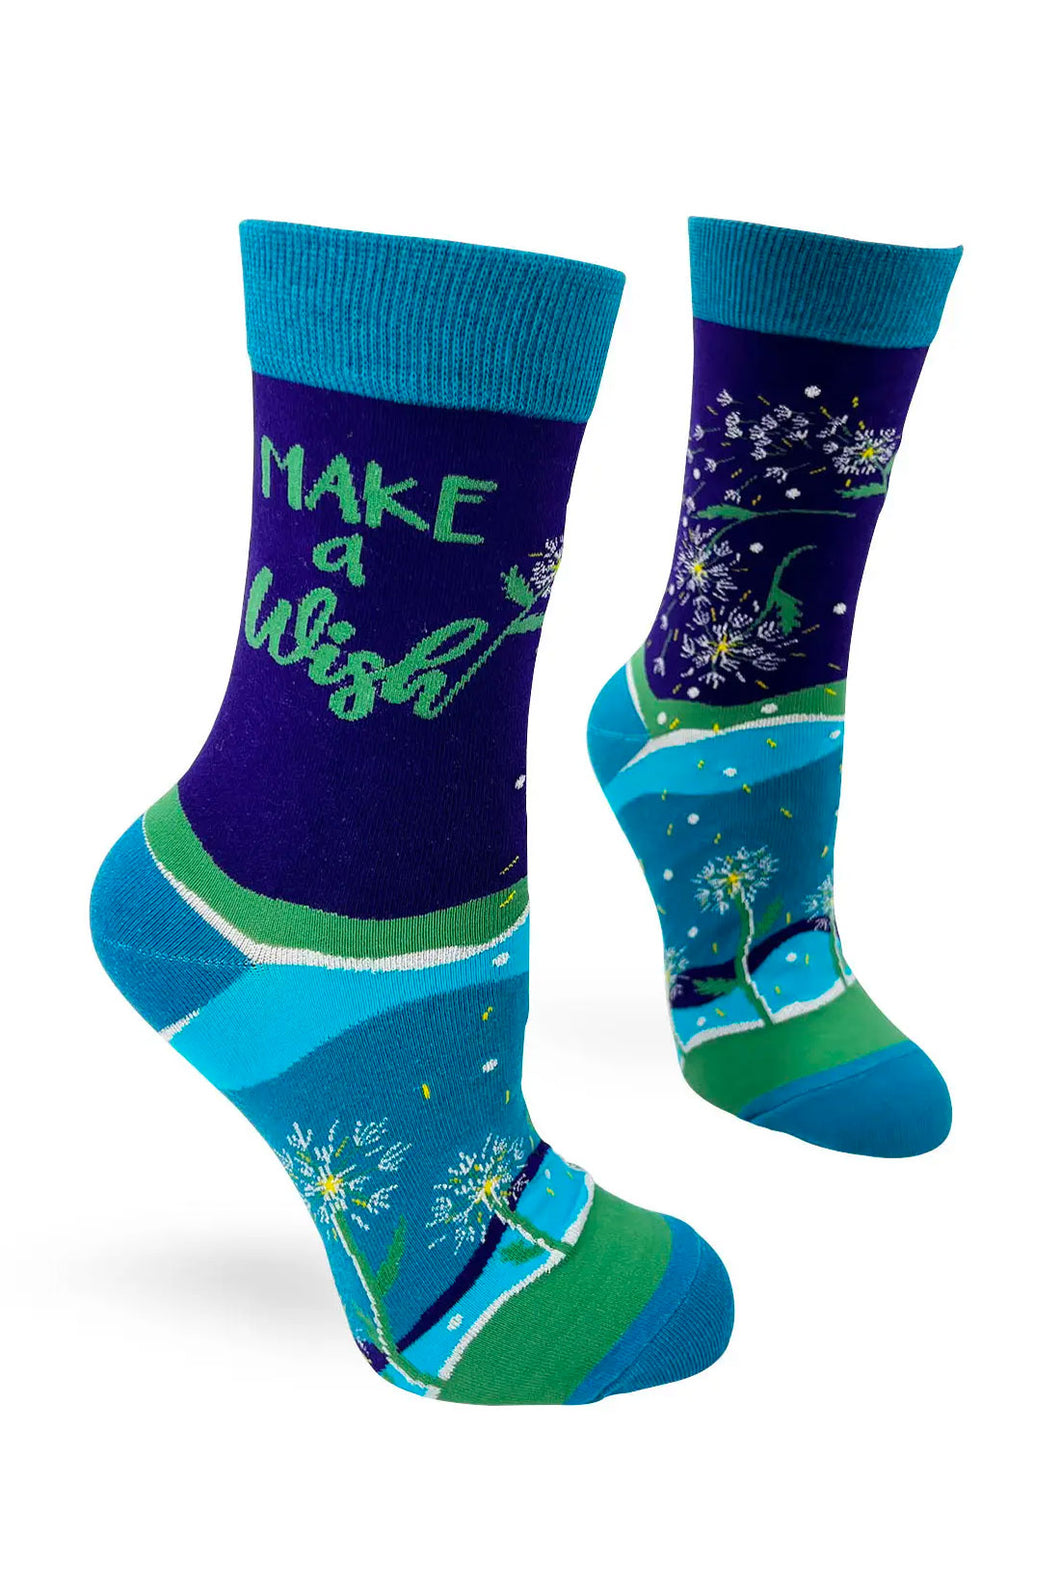 Socks - Make A Wish / FABDAZ